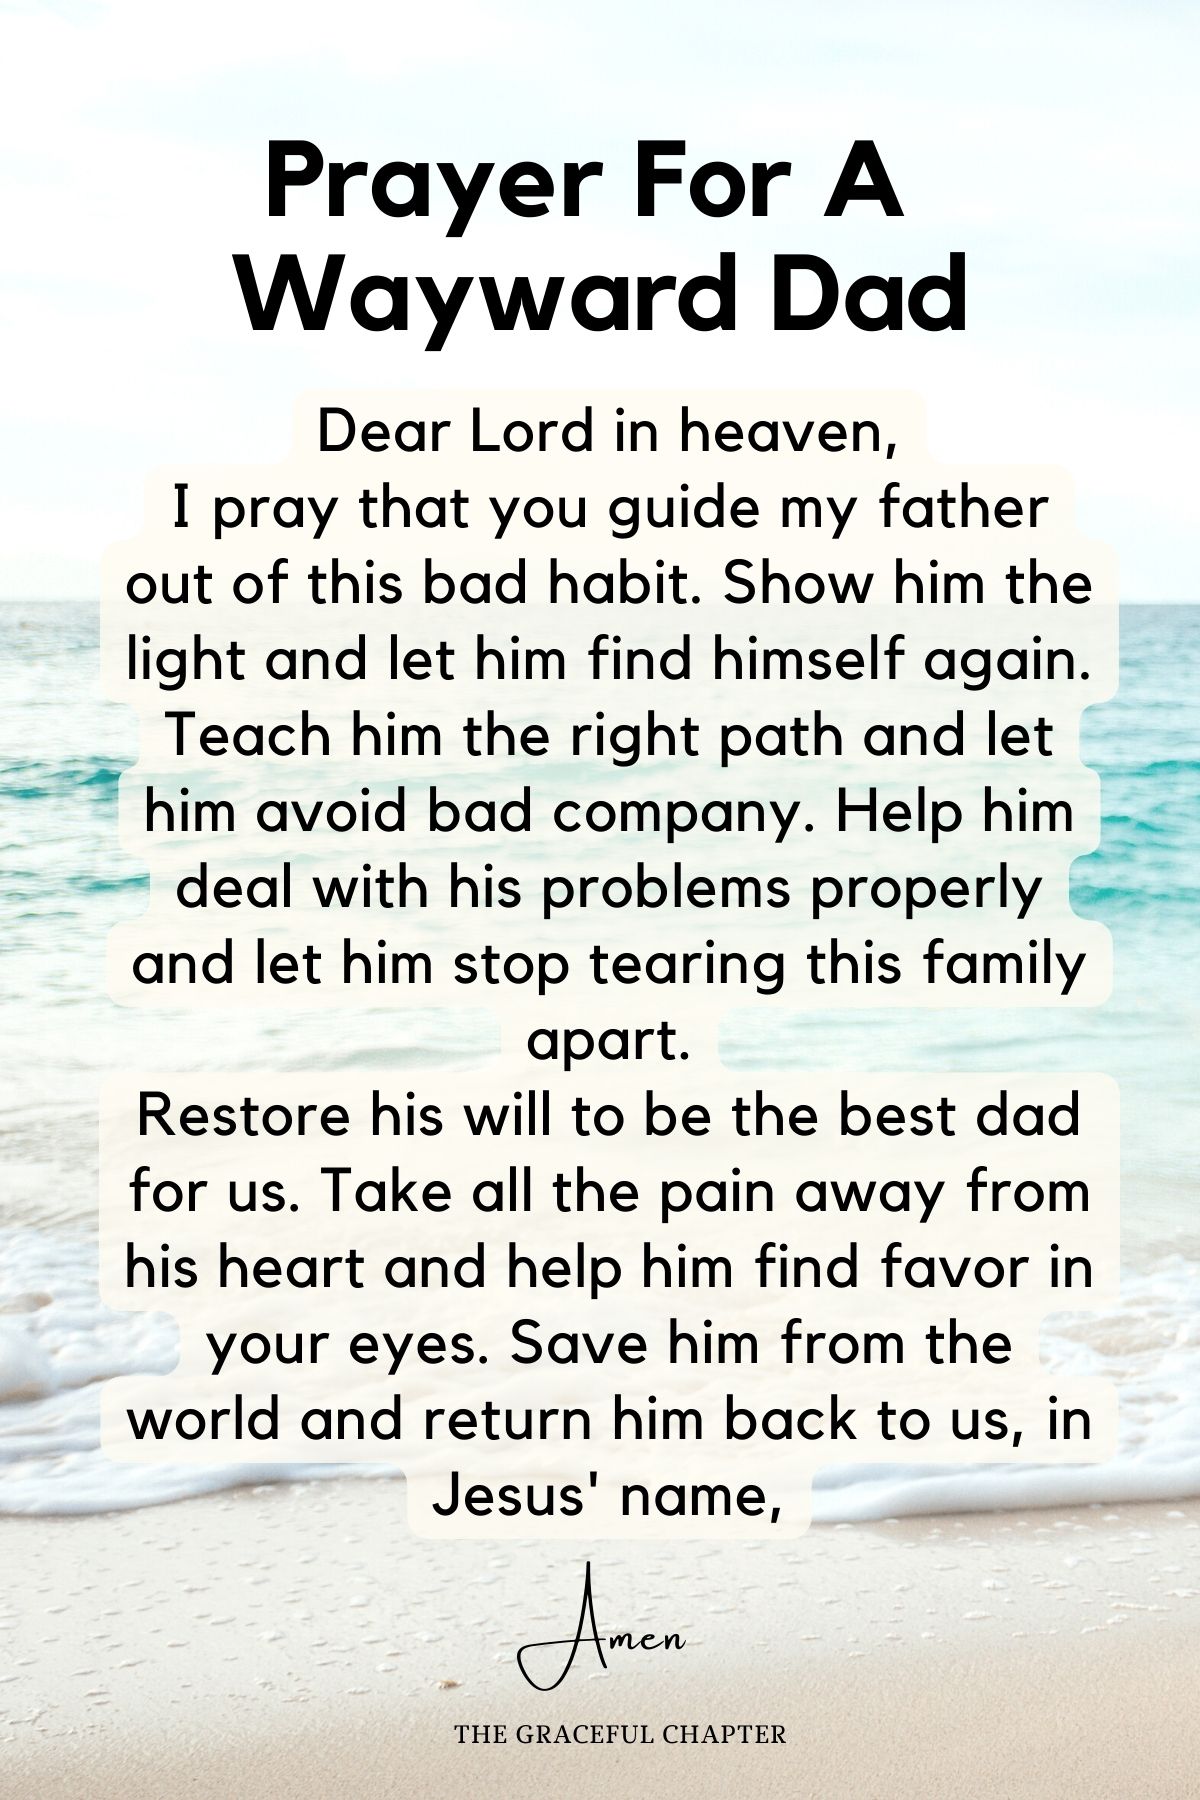 Prayer for a wayward dad